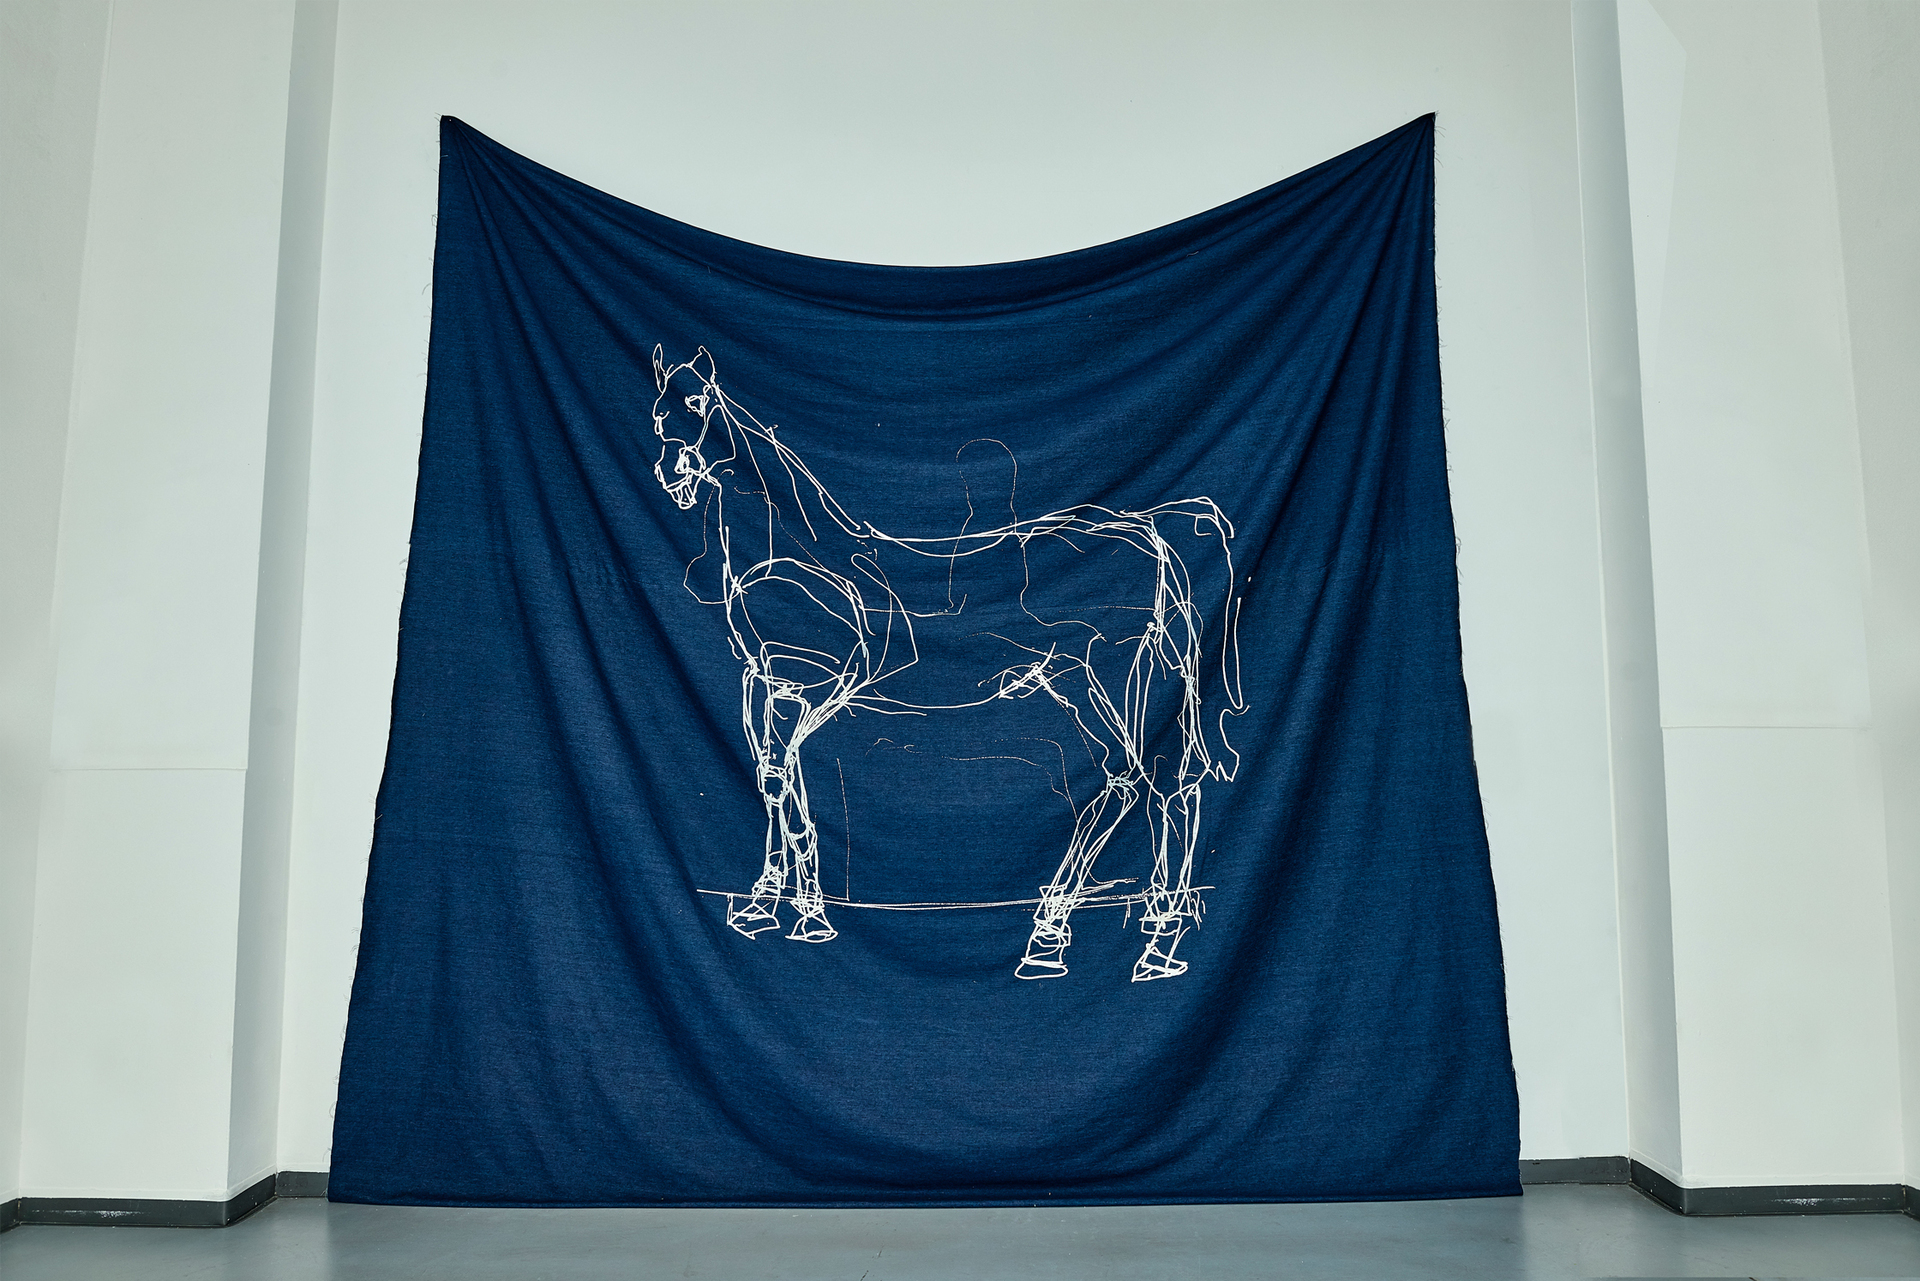 Sarah Ama, The Horse, 2022, silkscreen print on denim, 300 x 320cm